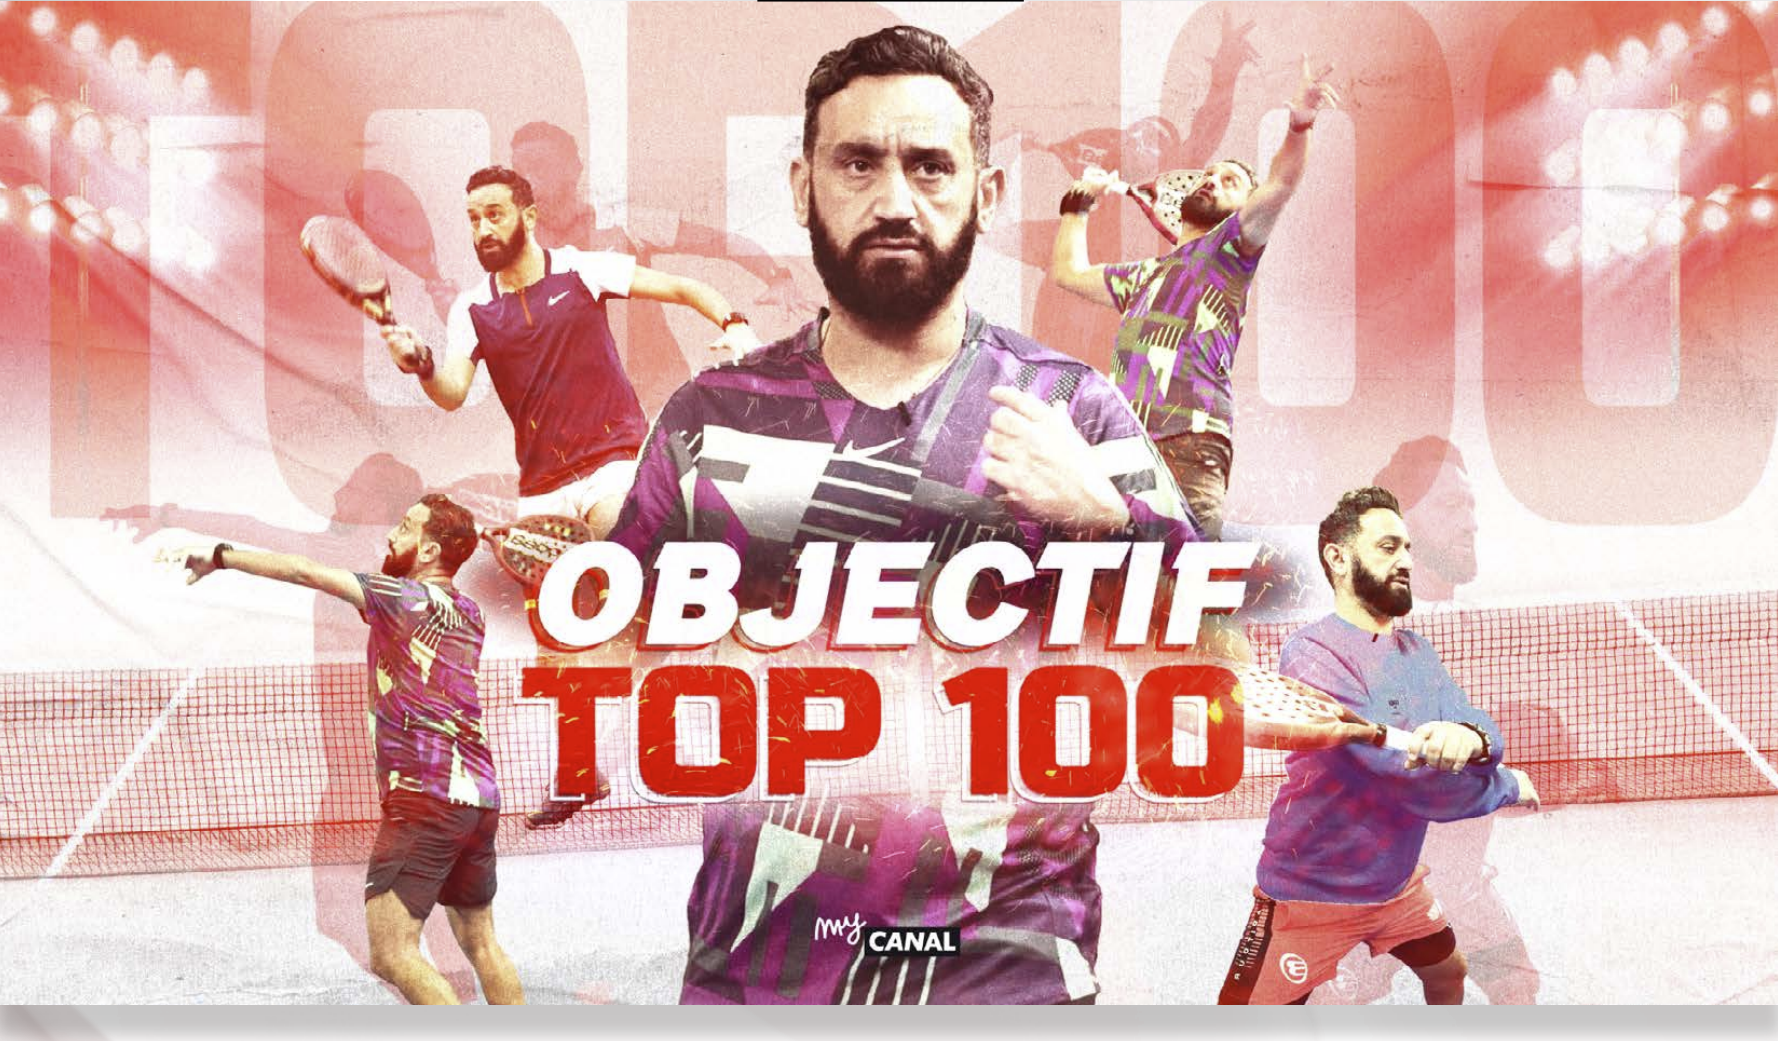 cyril hanouna goal top 100 season 2